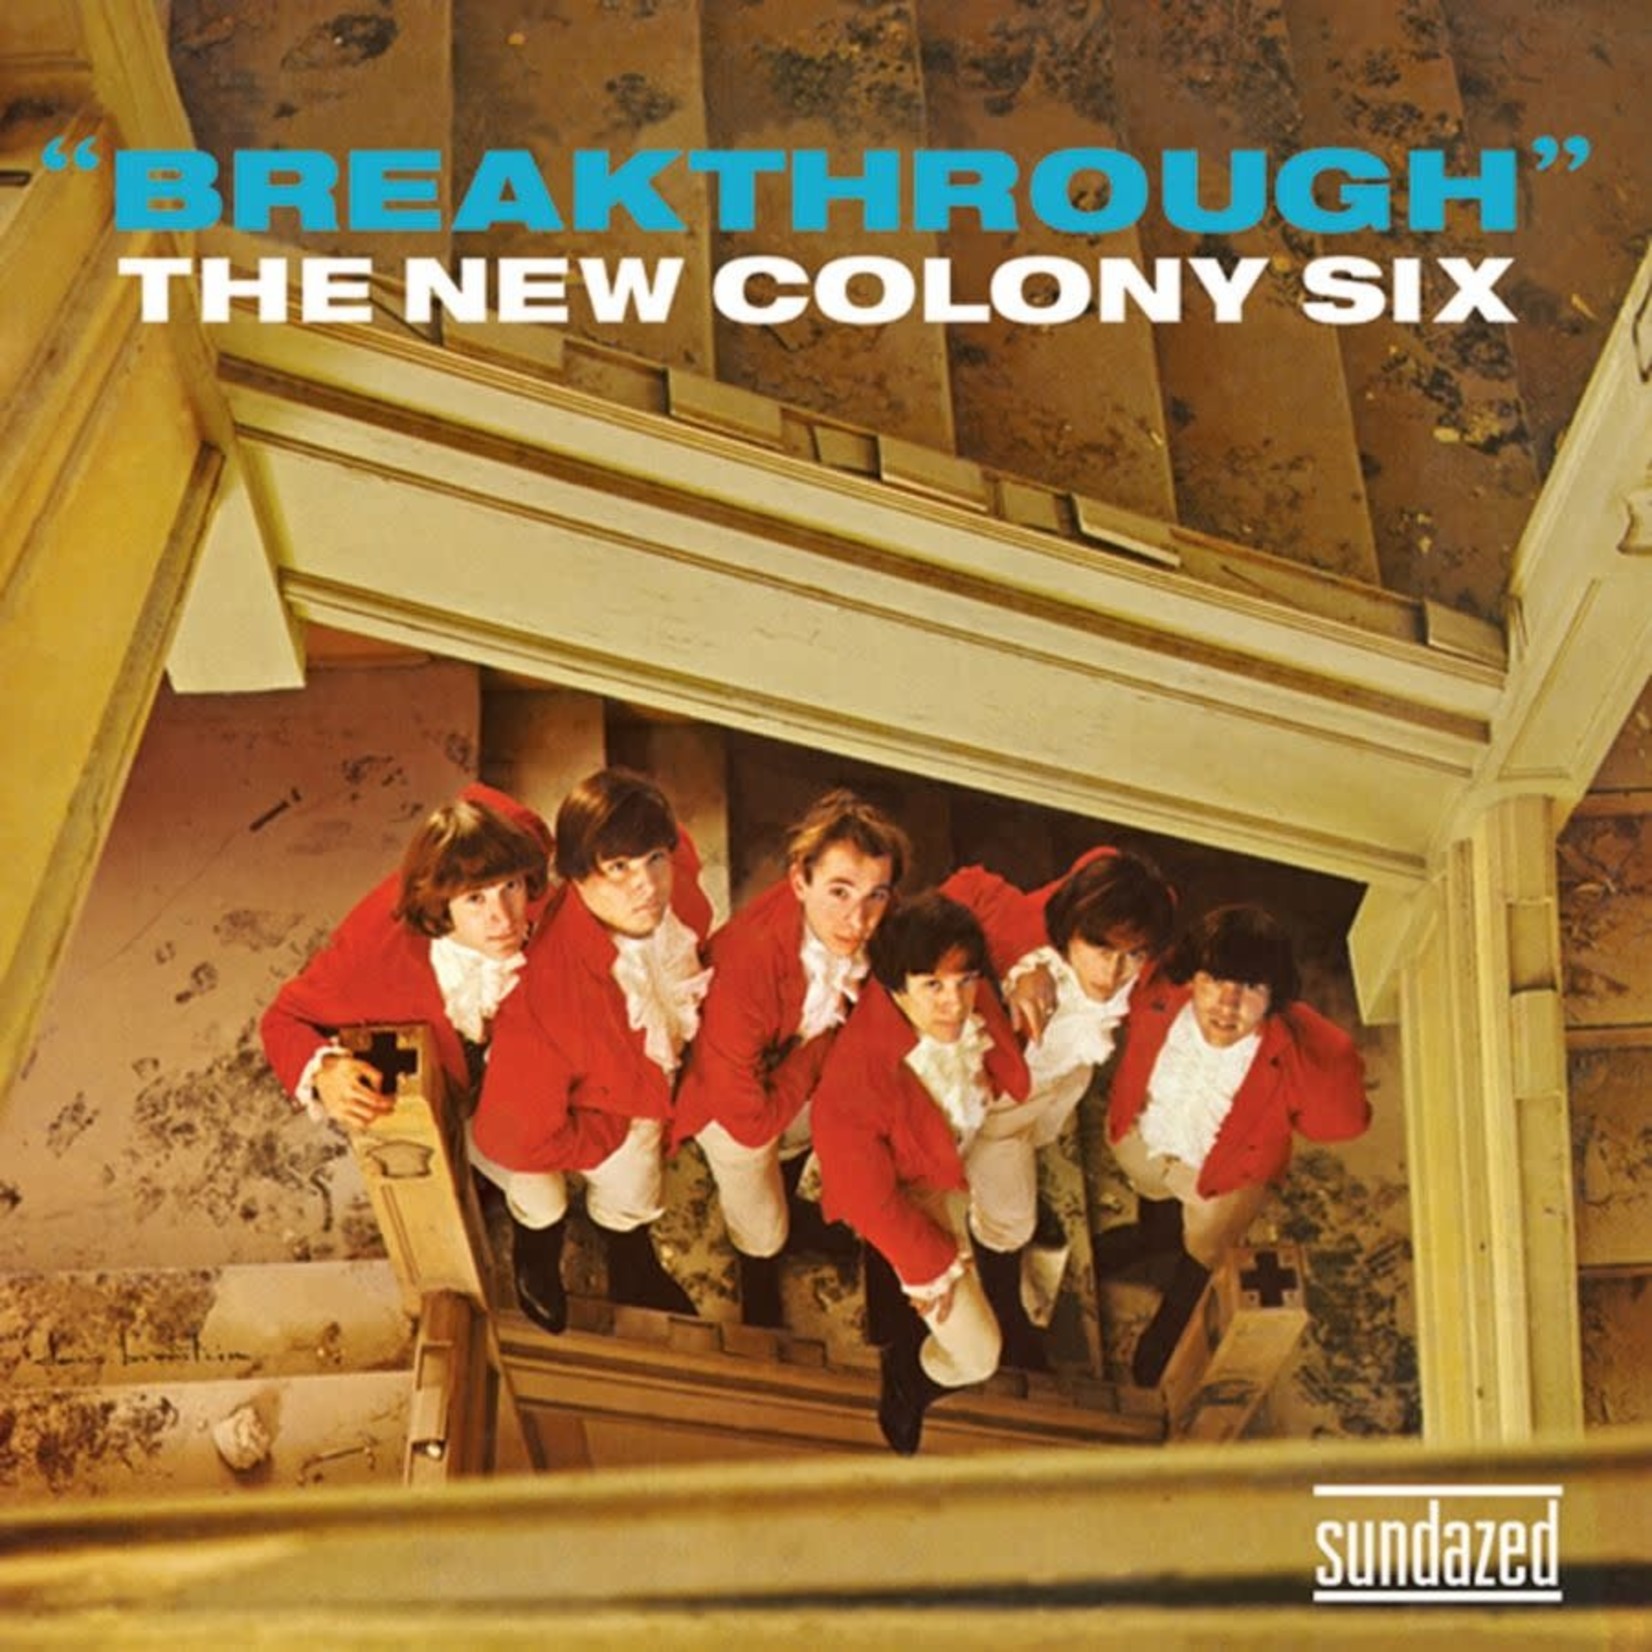 [New] The New Colony Six - Breakthrough